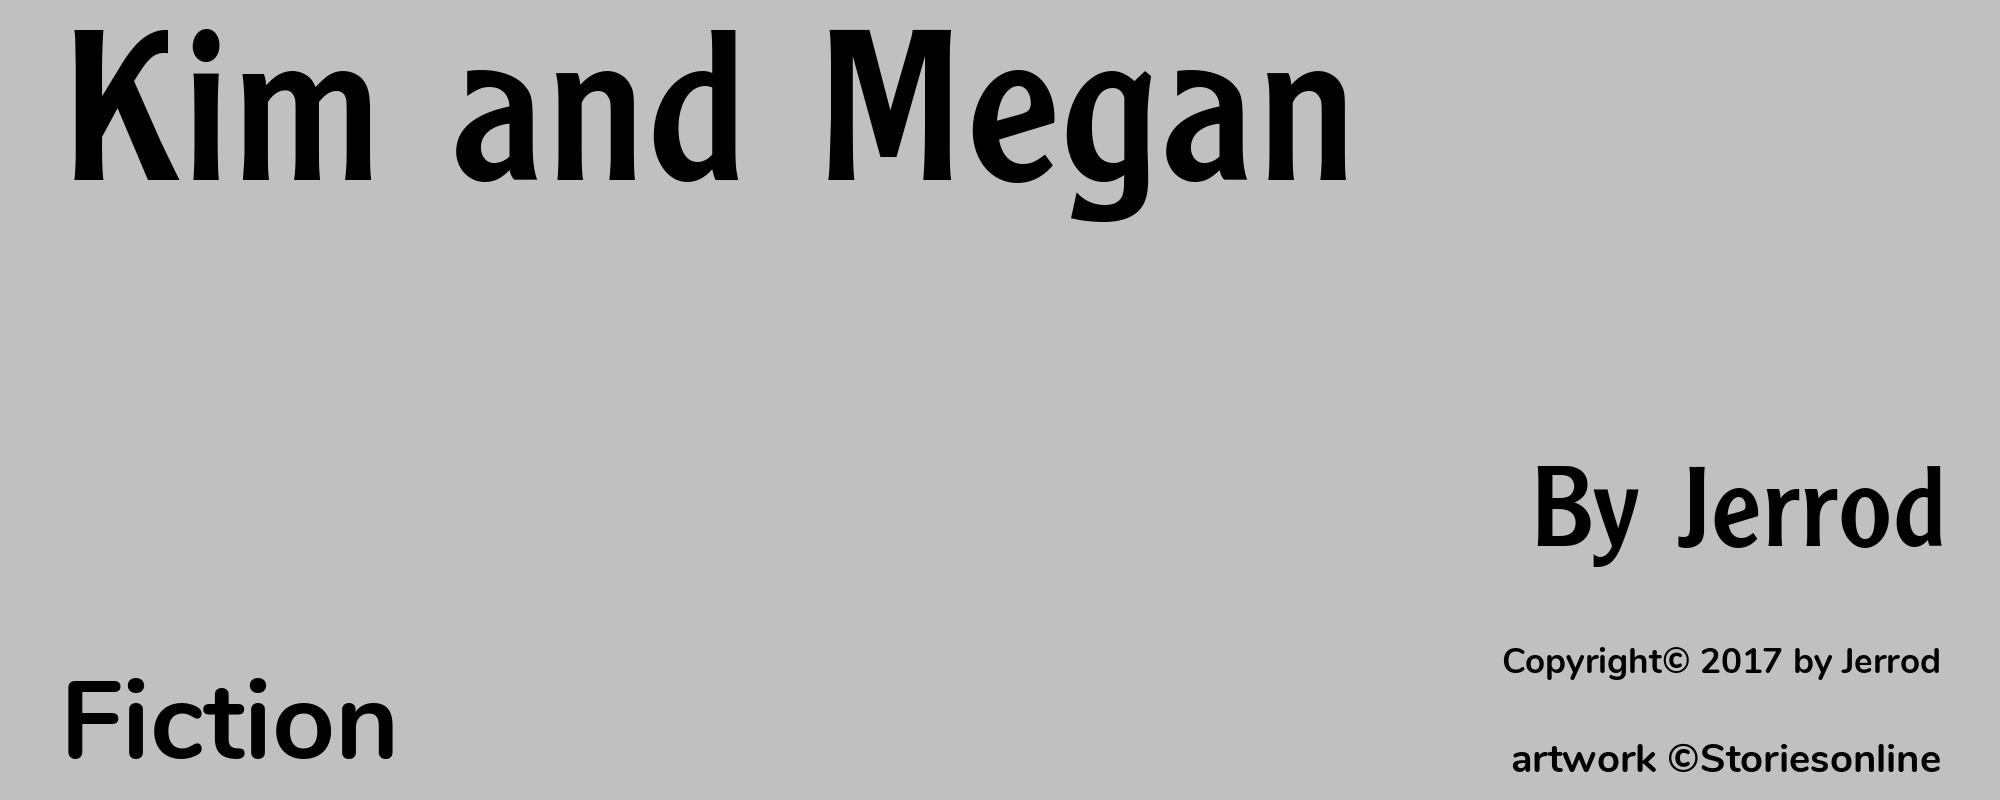 Kim and Megan - Cover